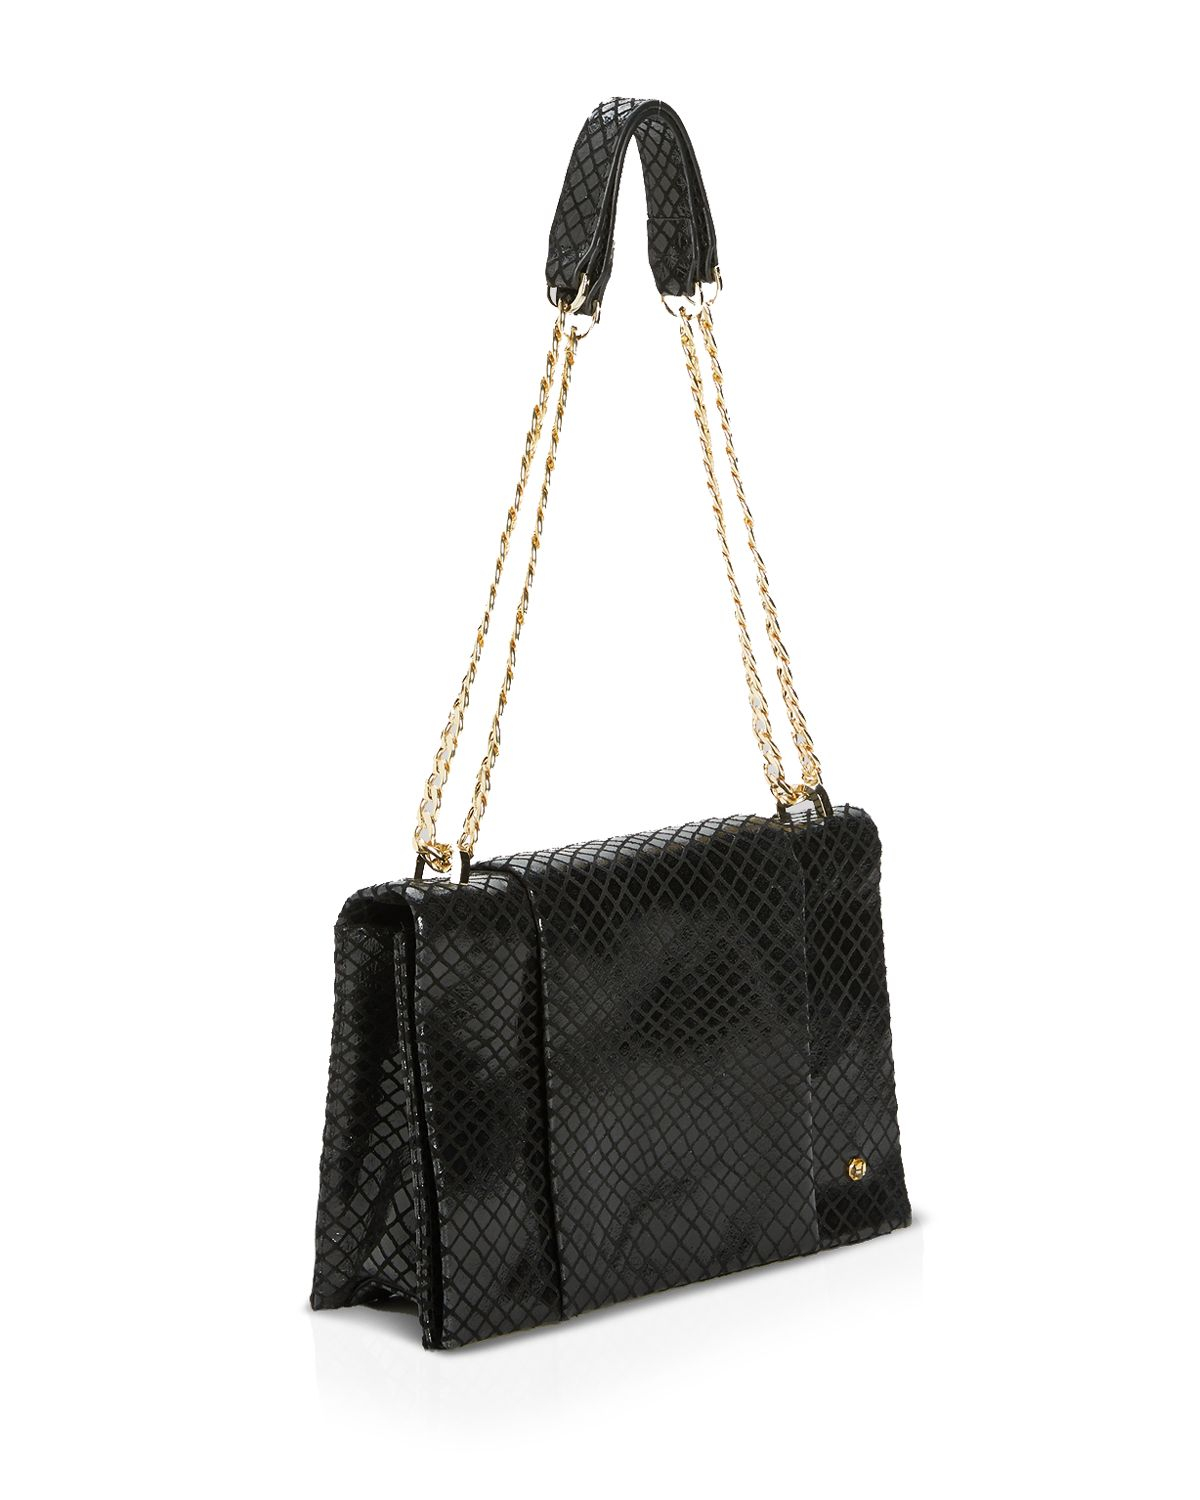 Lyst - Halston Shoulder Bag - Embossed Convertible Chain Handle in Black